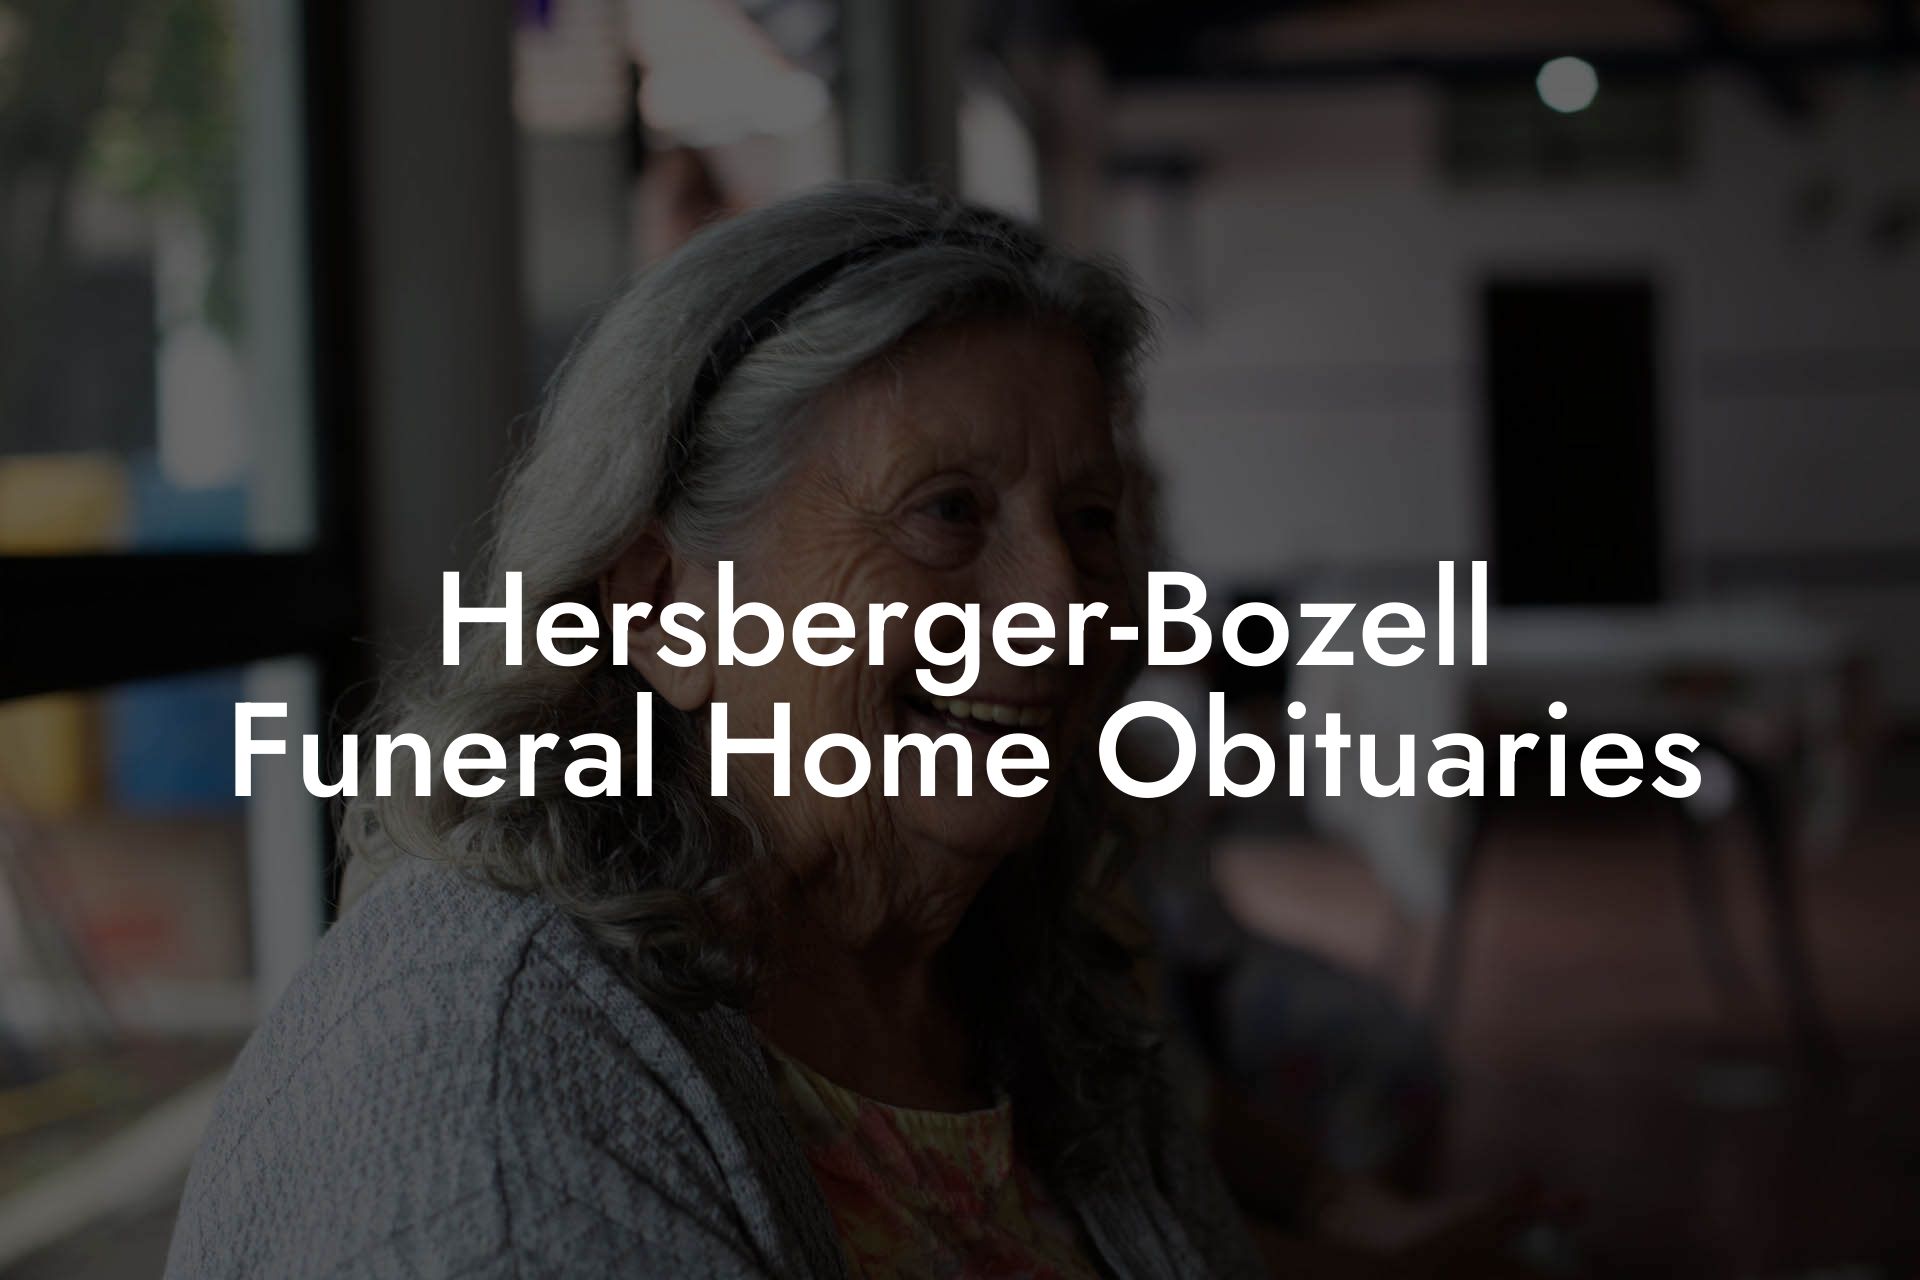 Hersberger-Bozell Funeral Home Obituaries